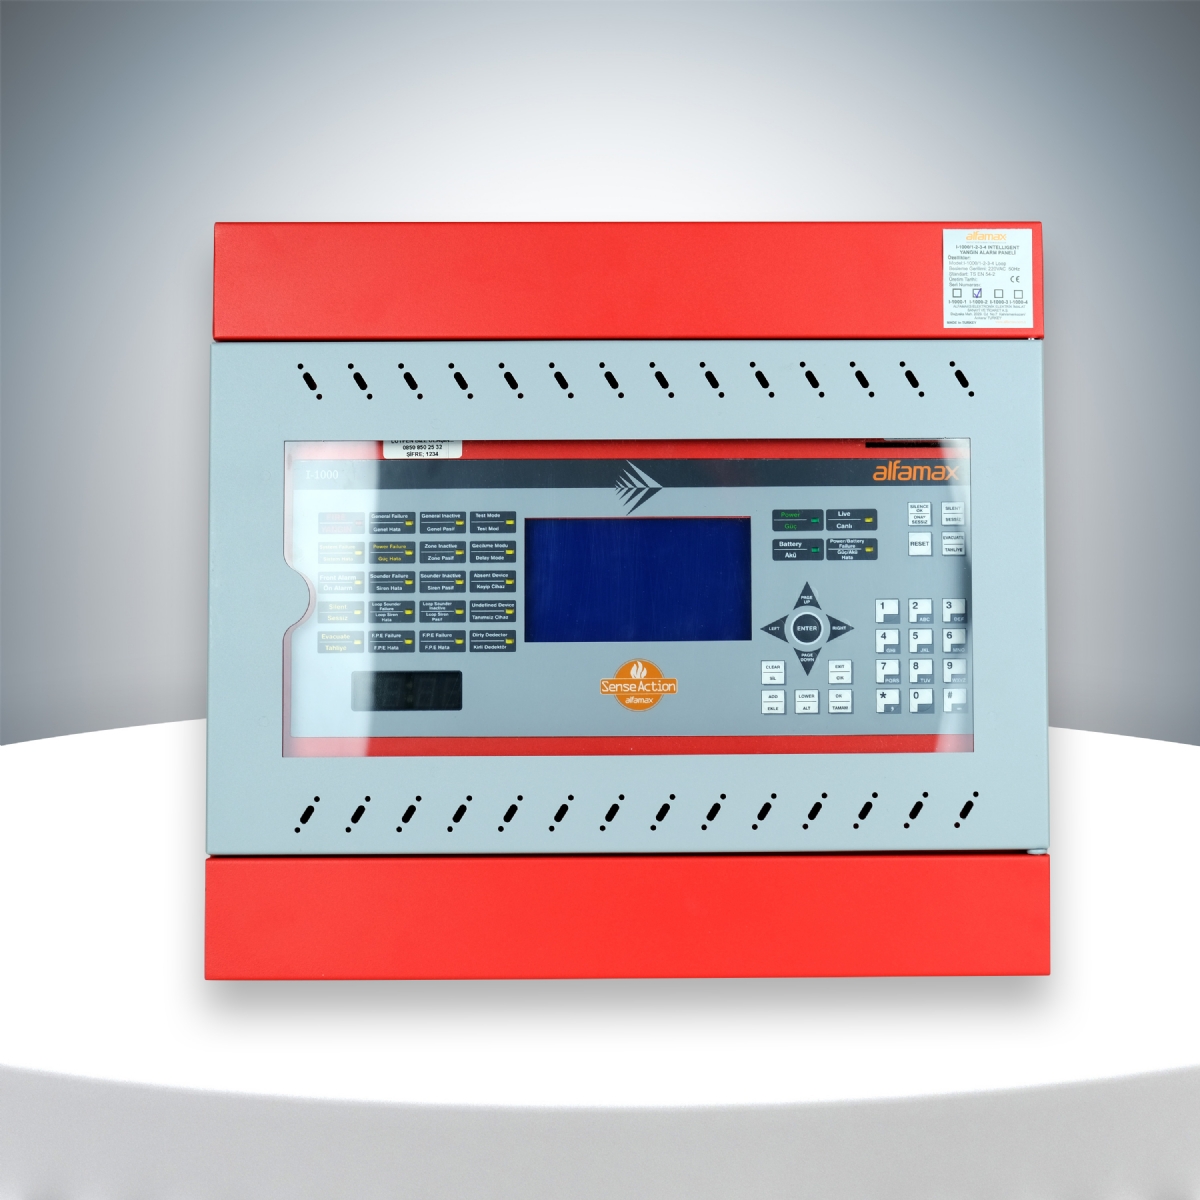 I-1000-4 3 Loop Addressable Fire Alarm Panel